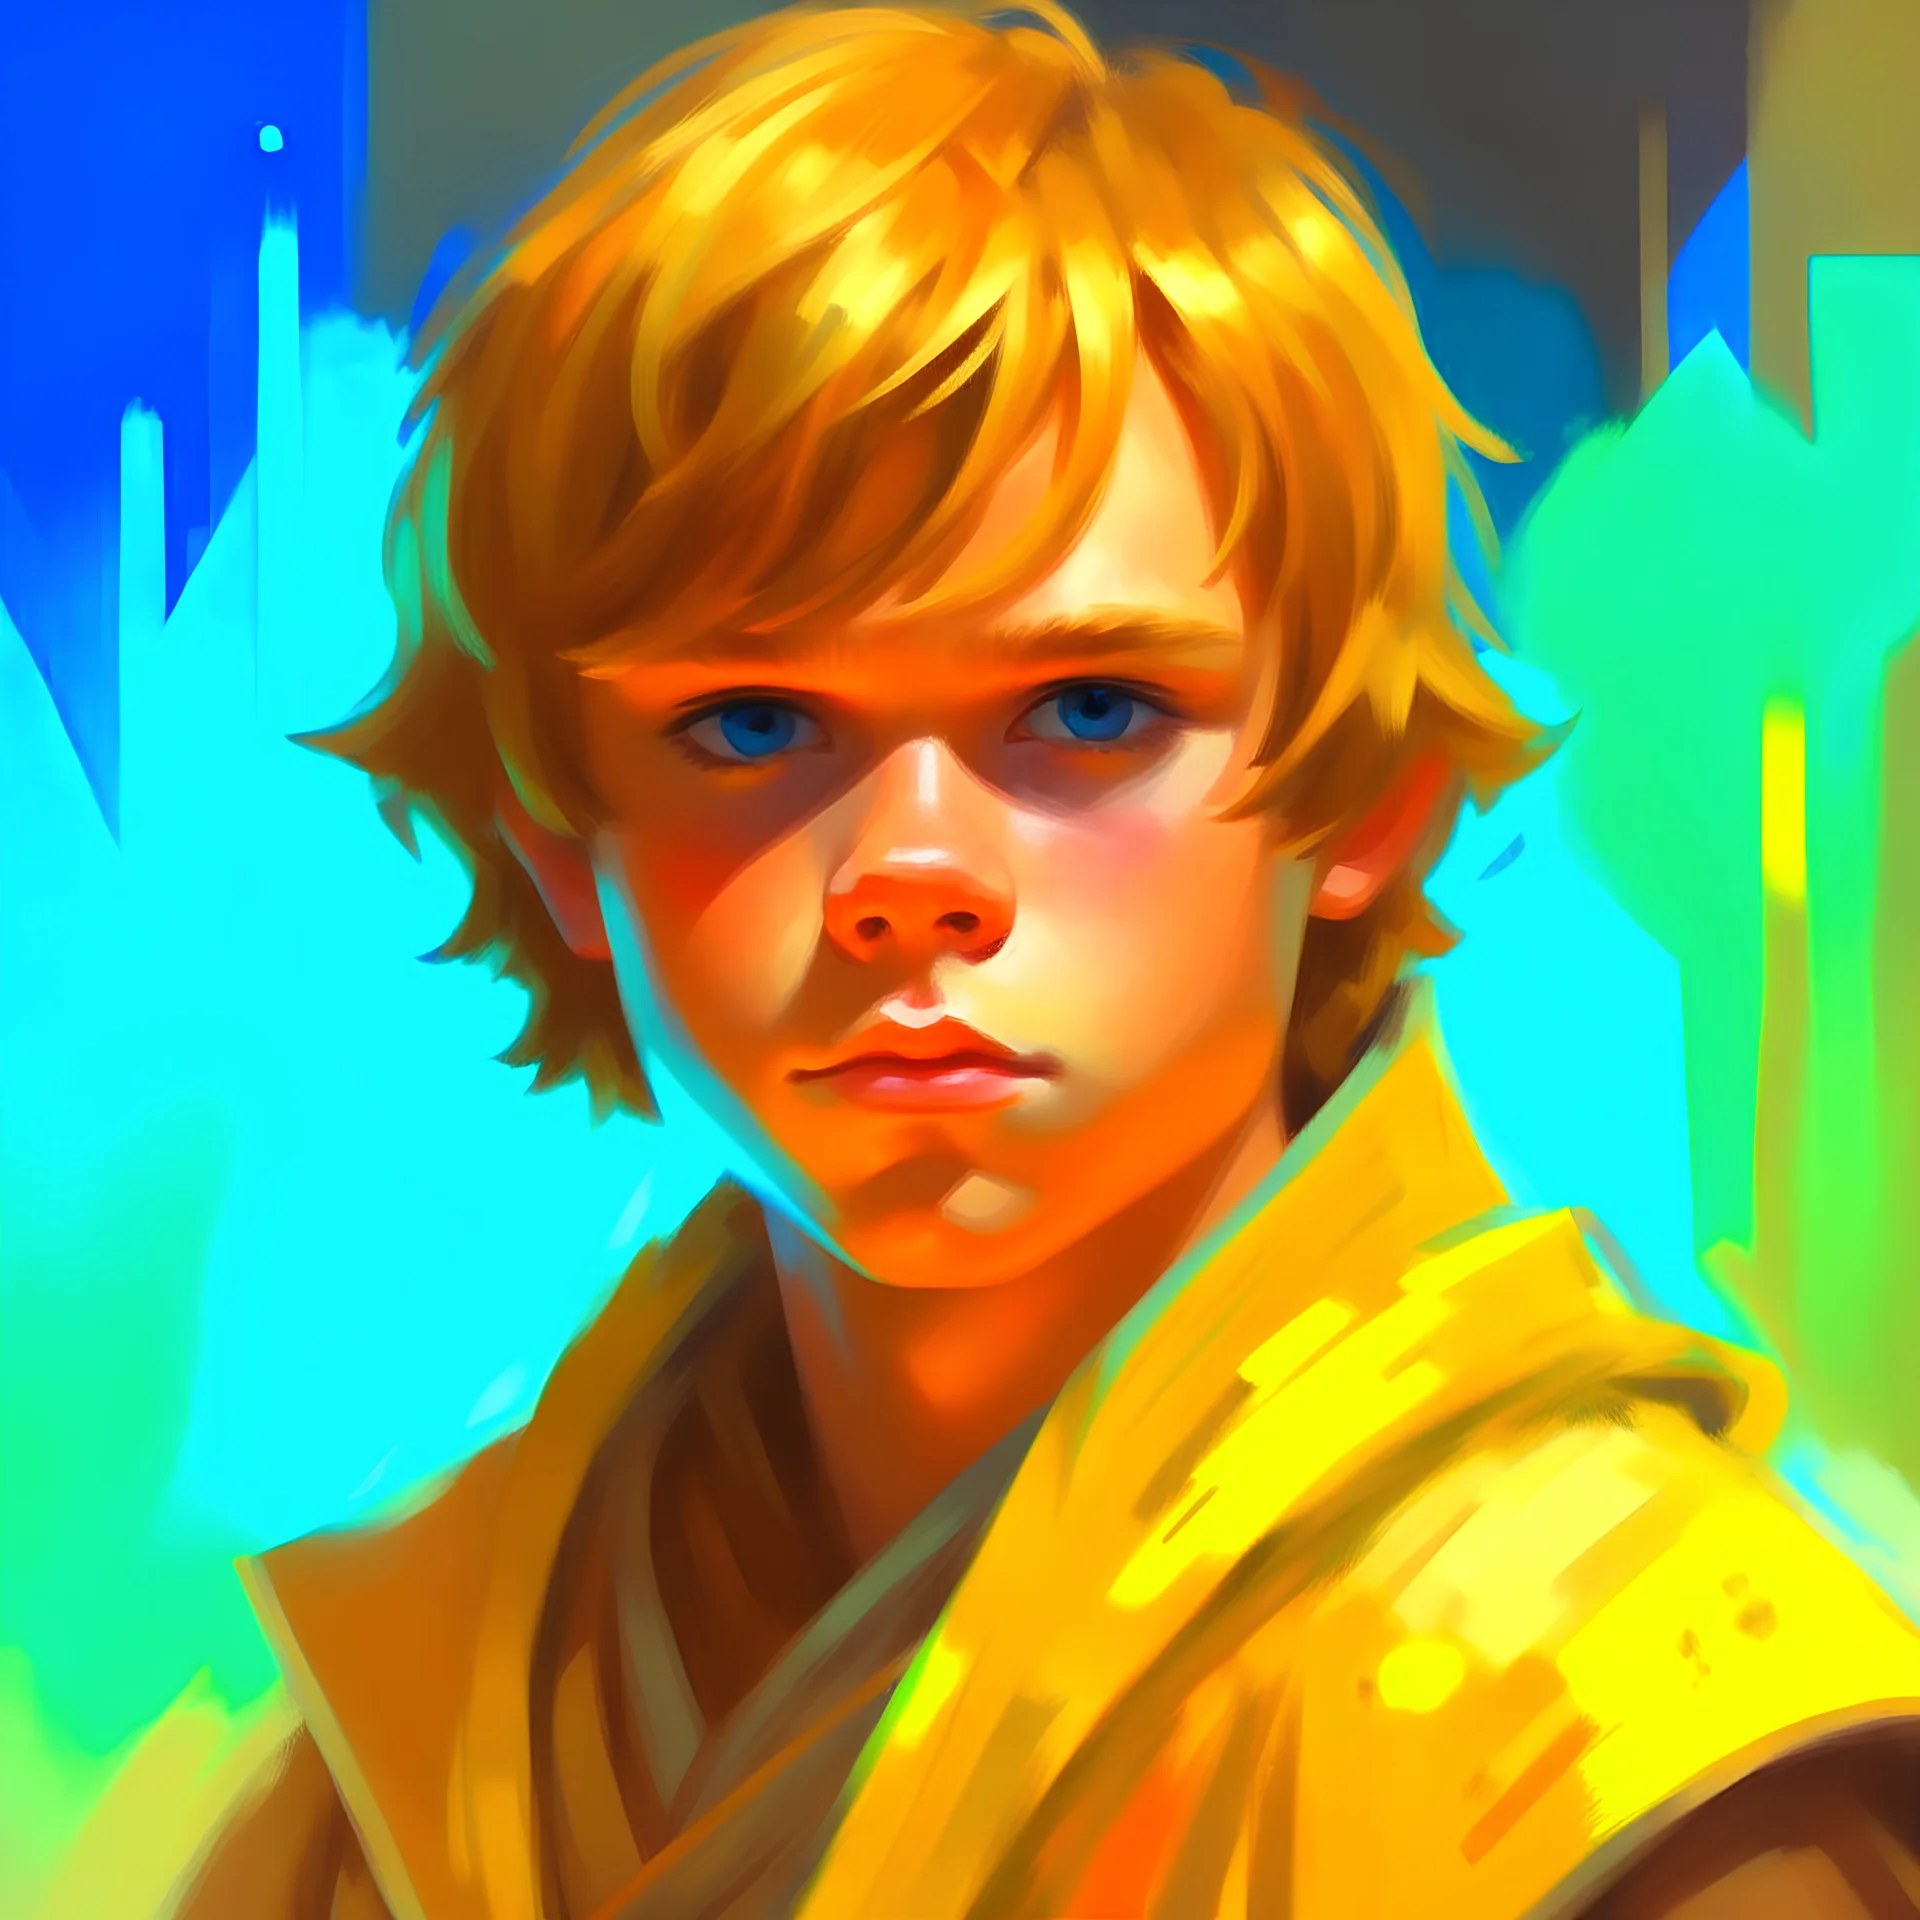 Rough paint art, tcg card illustration of young Jedi Knight Luke Skywalker